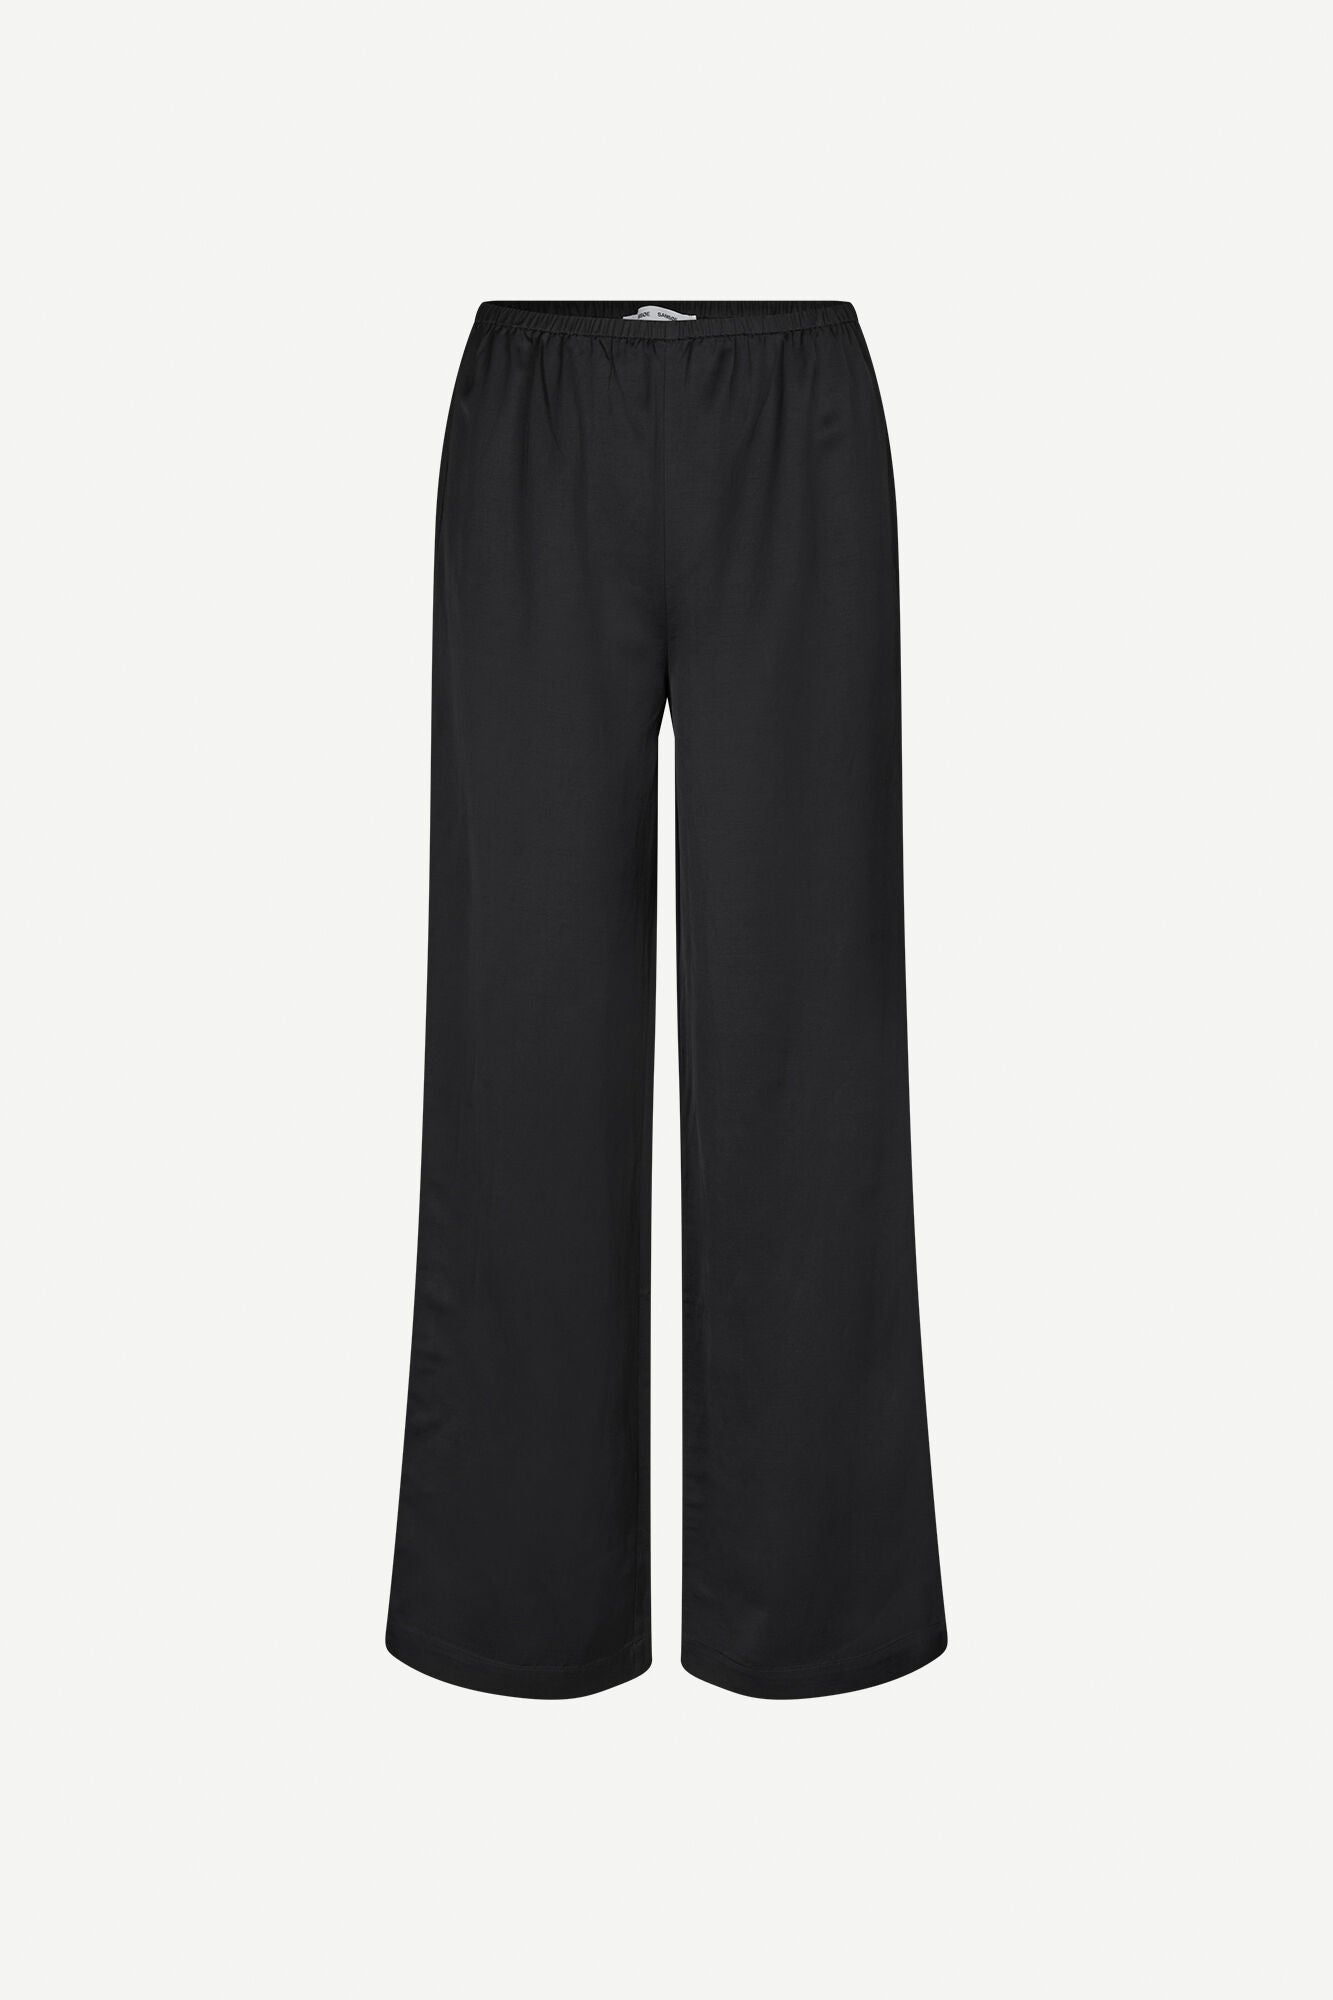 Marina pants in black